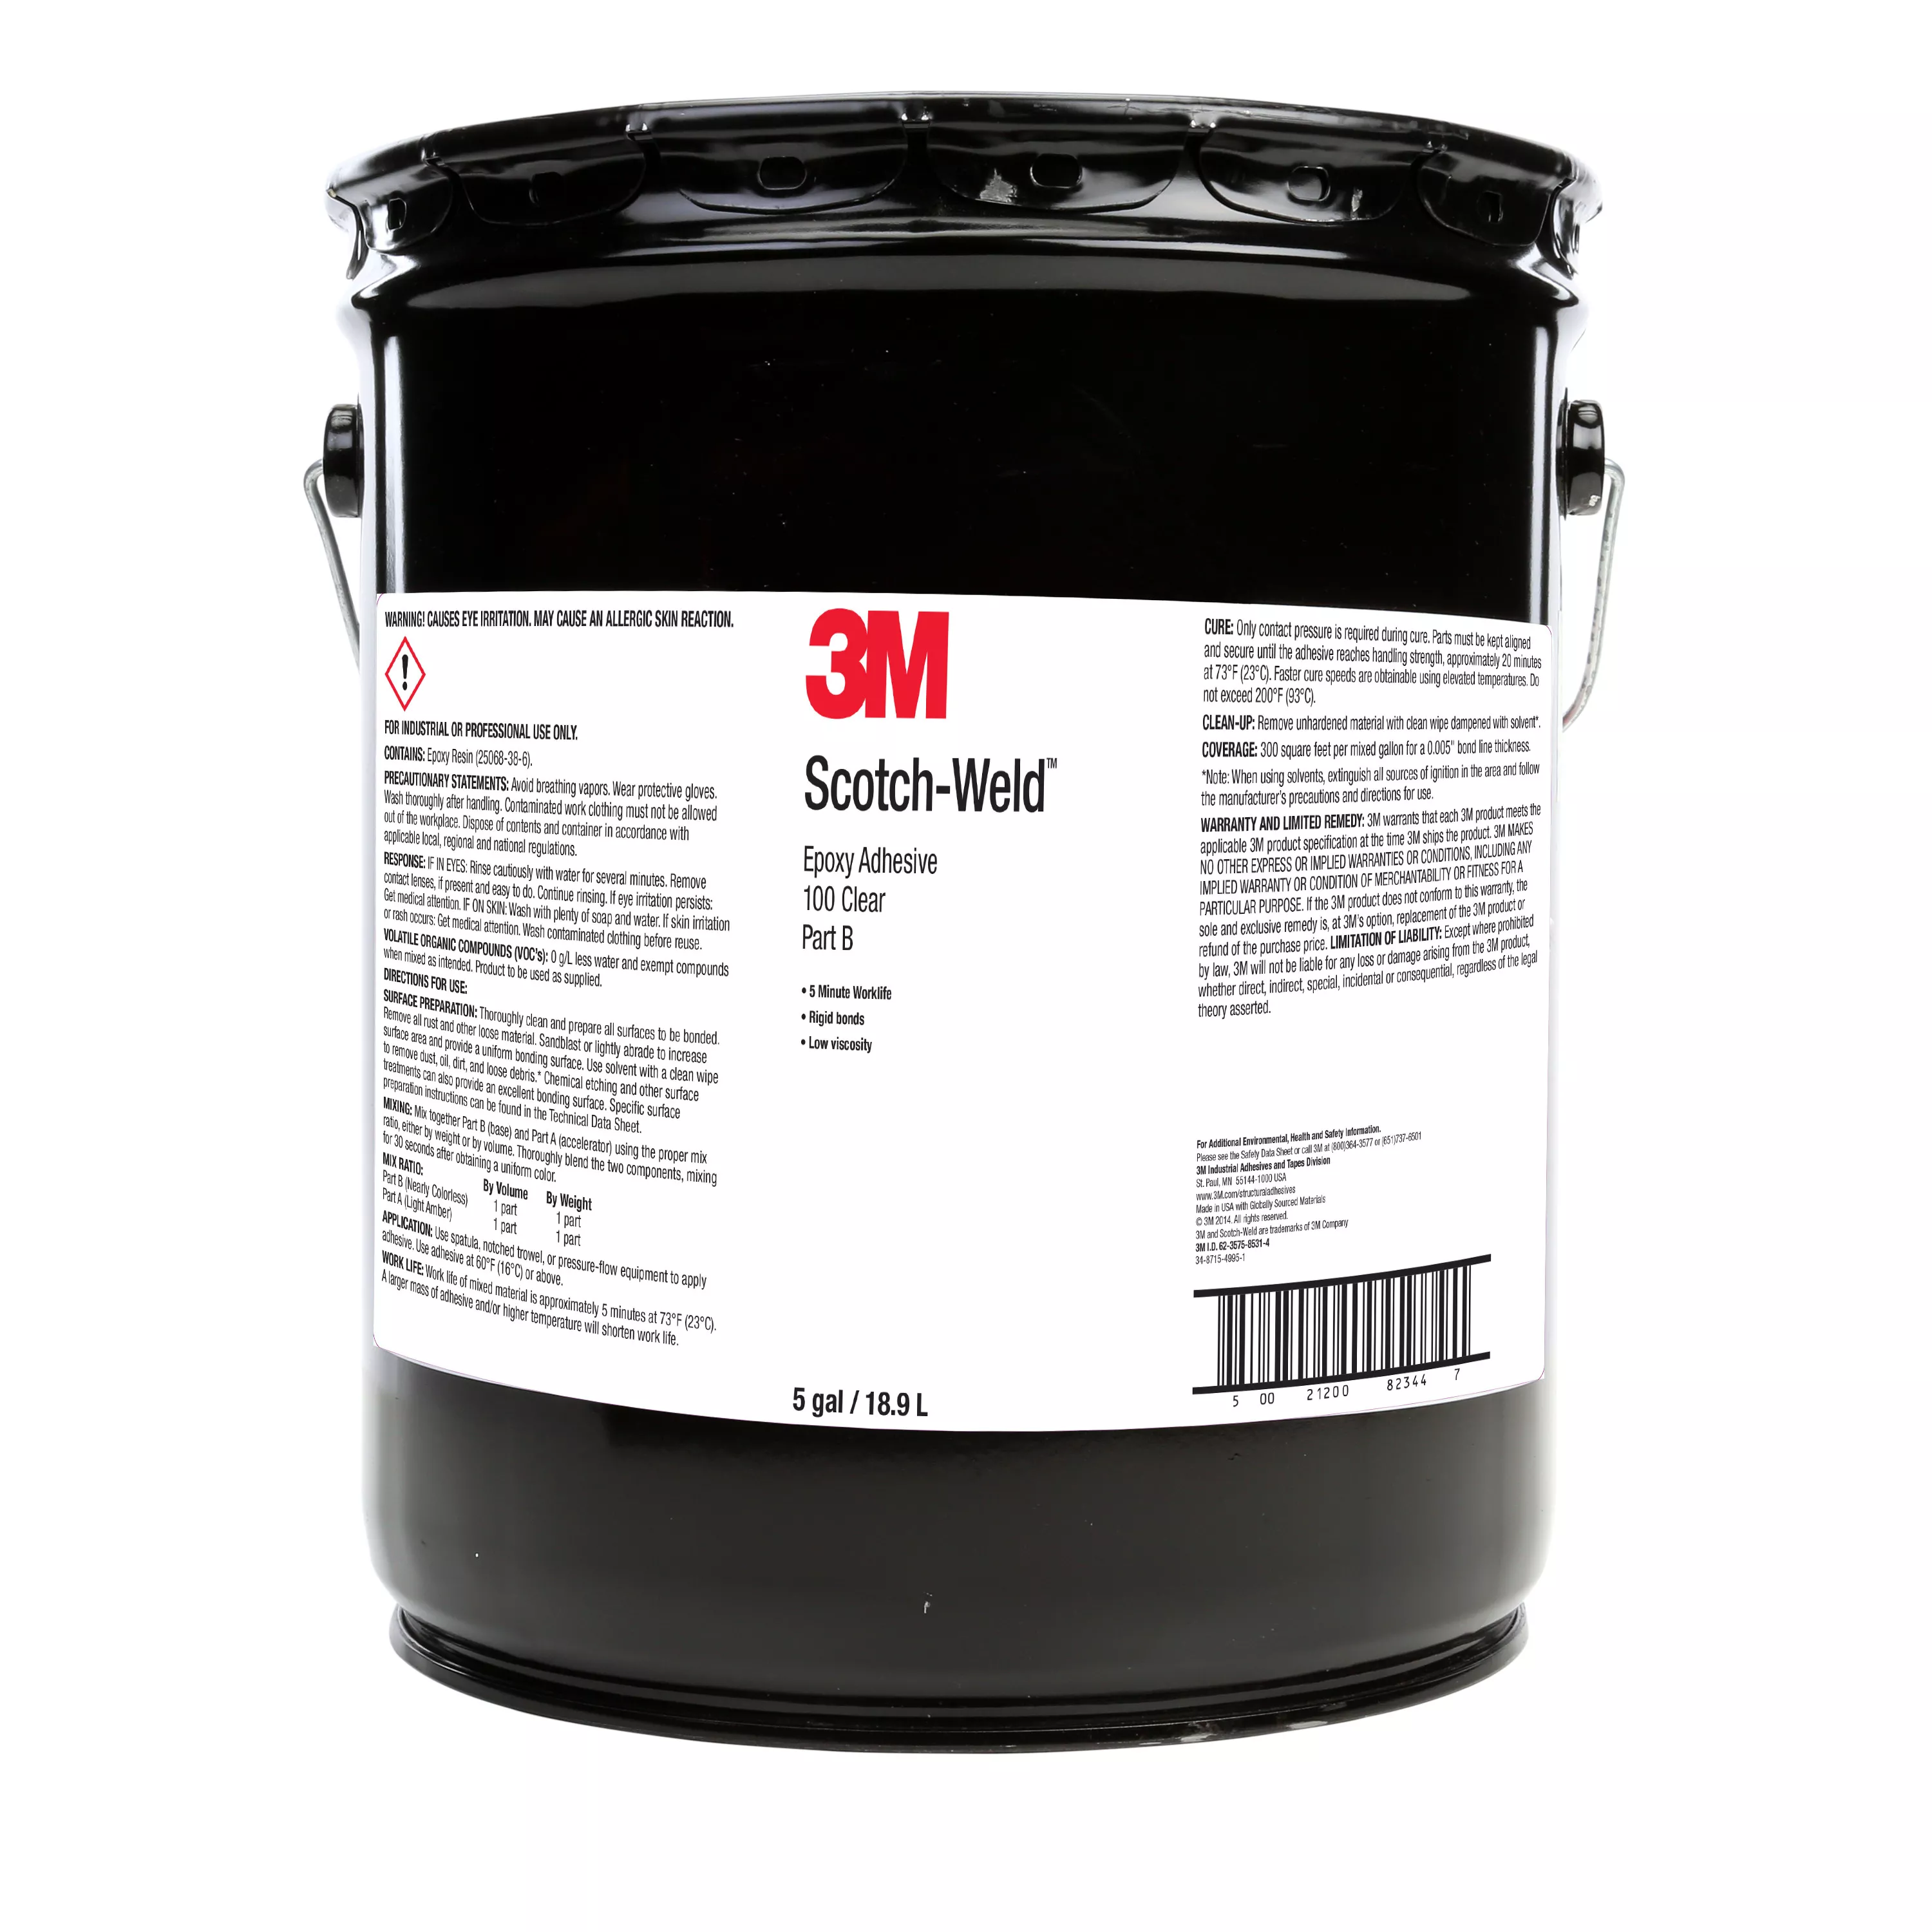 3M™ Scotch-Weld™ Epoxy Adhesive 100, Clear, Part B, 5 Gallon (Pail),
Drum